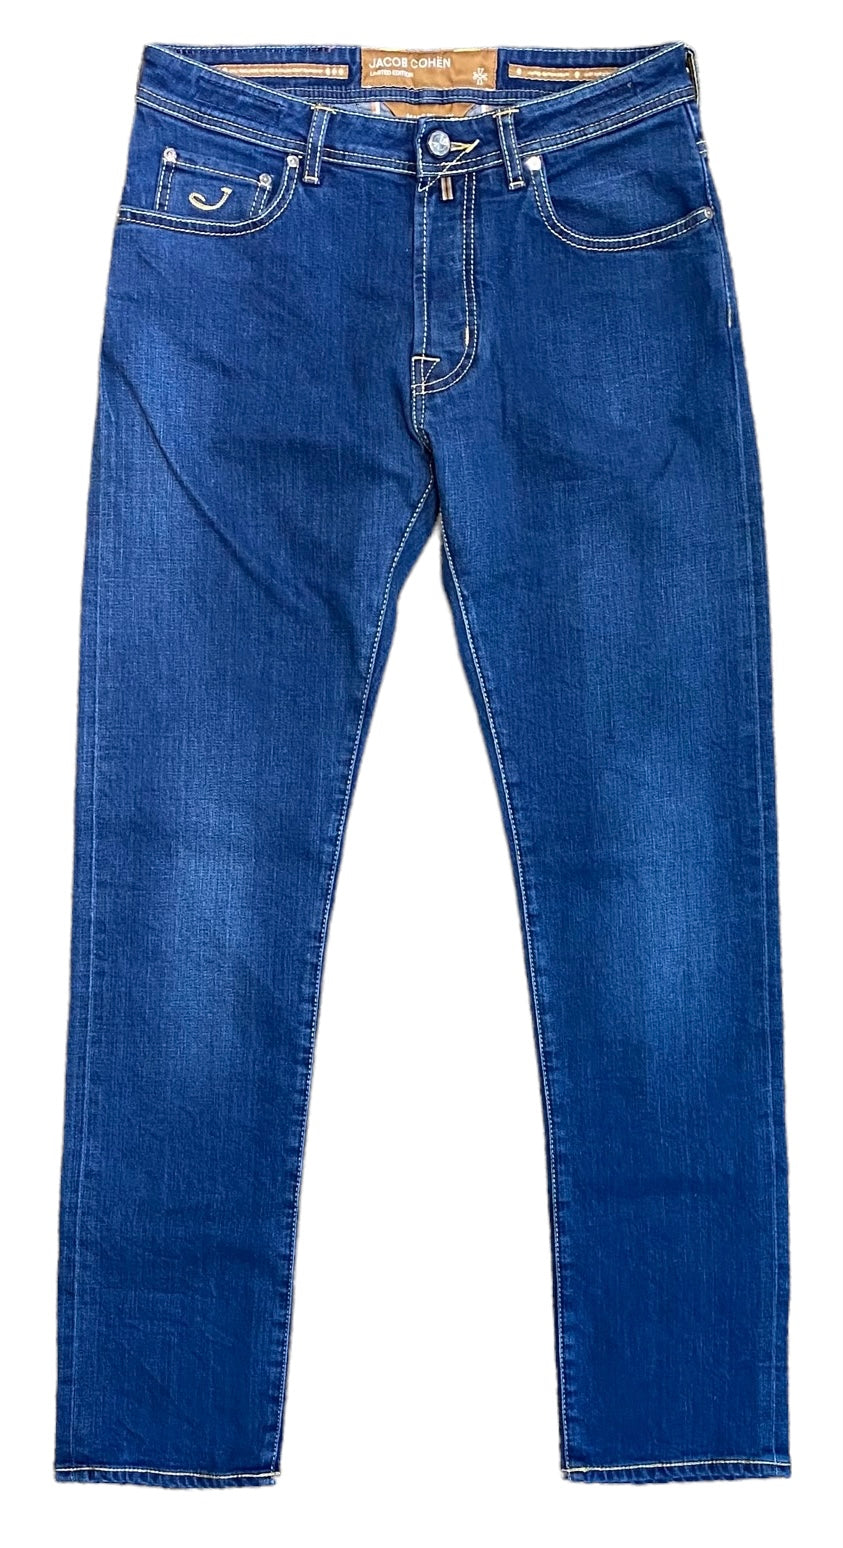 Jacob Cohën jeans Bard Limited